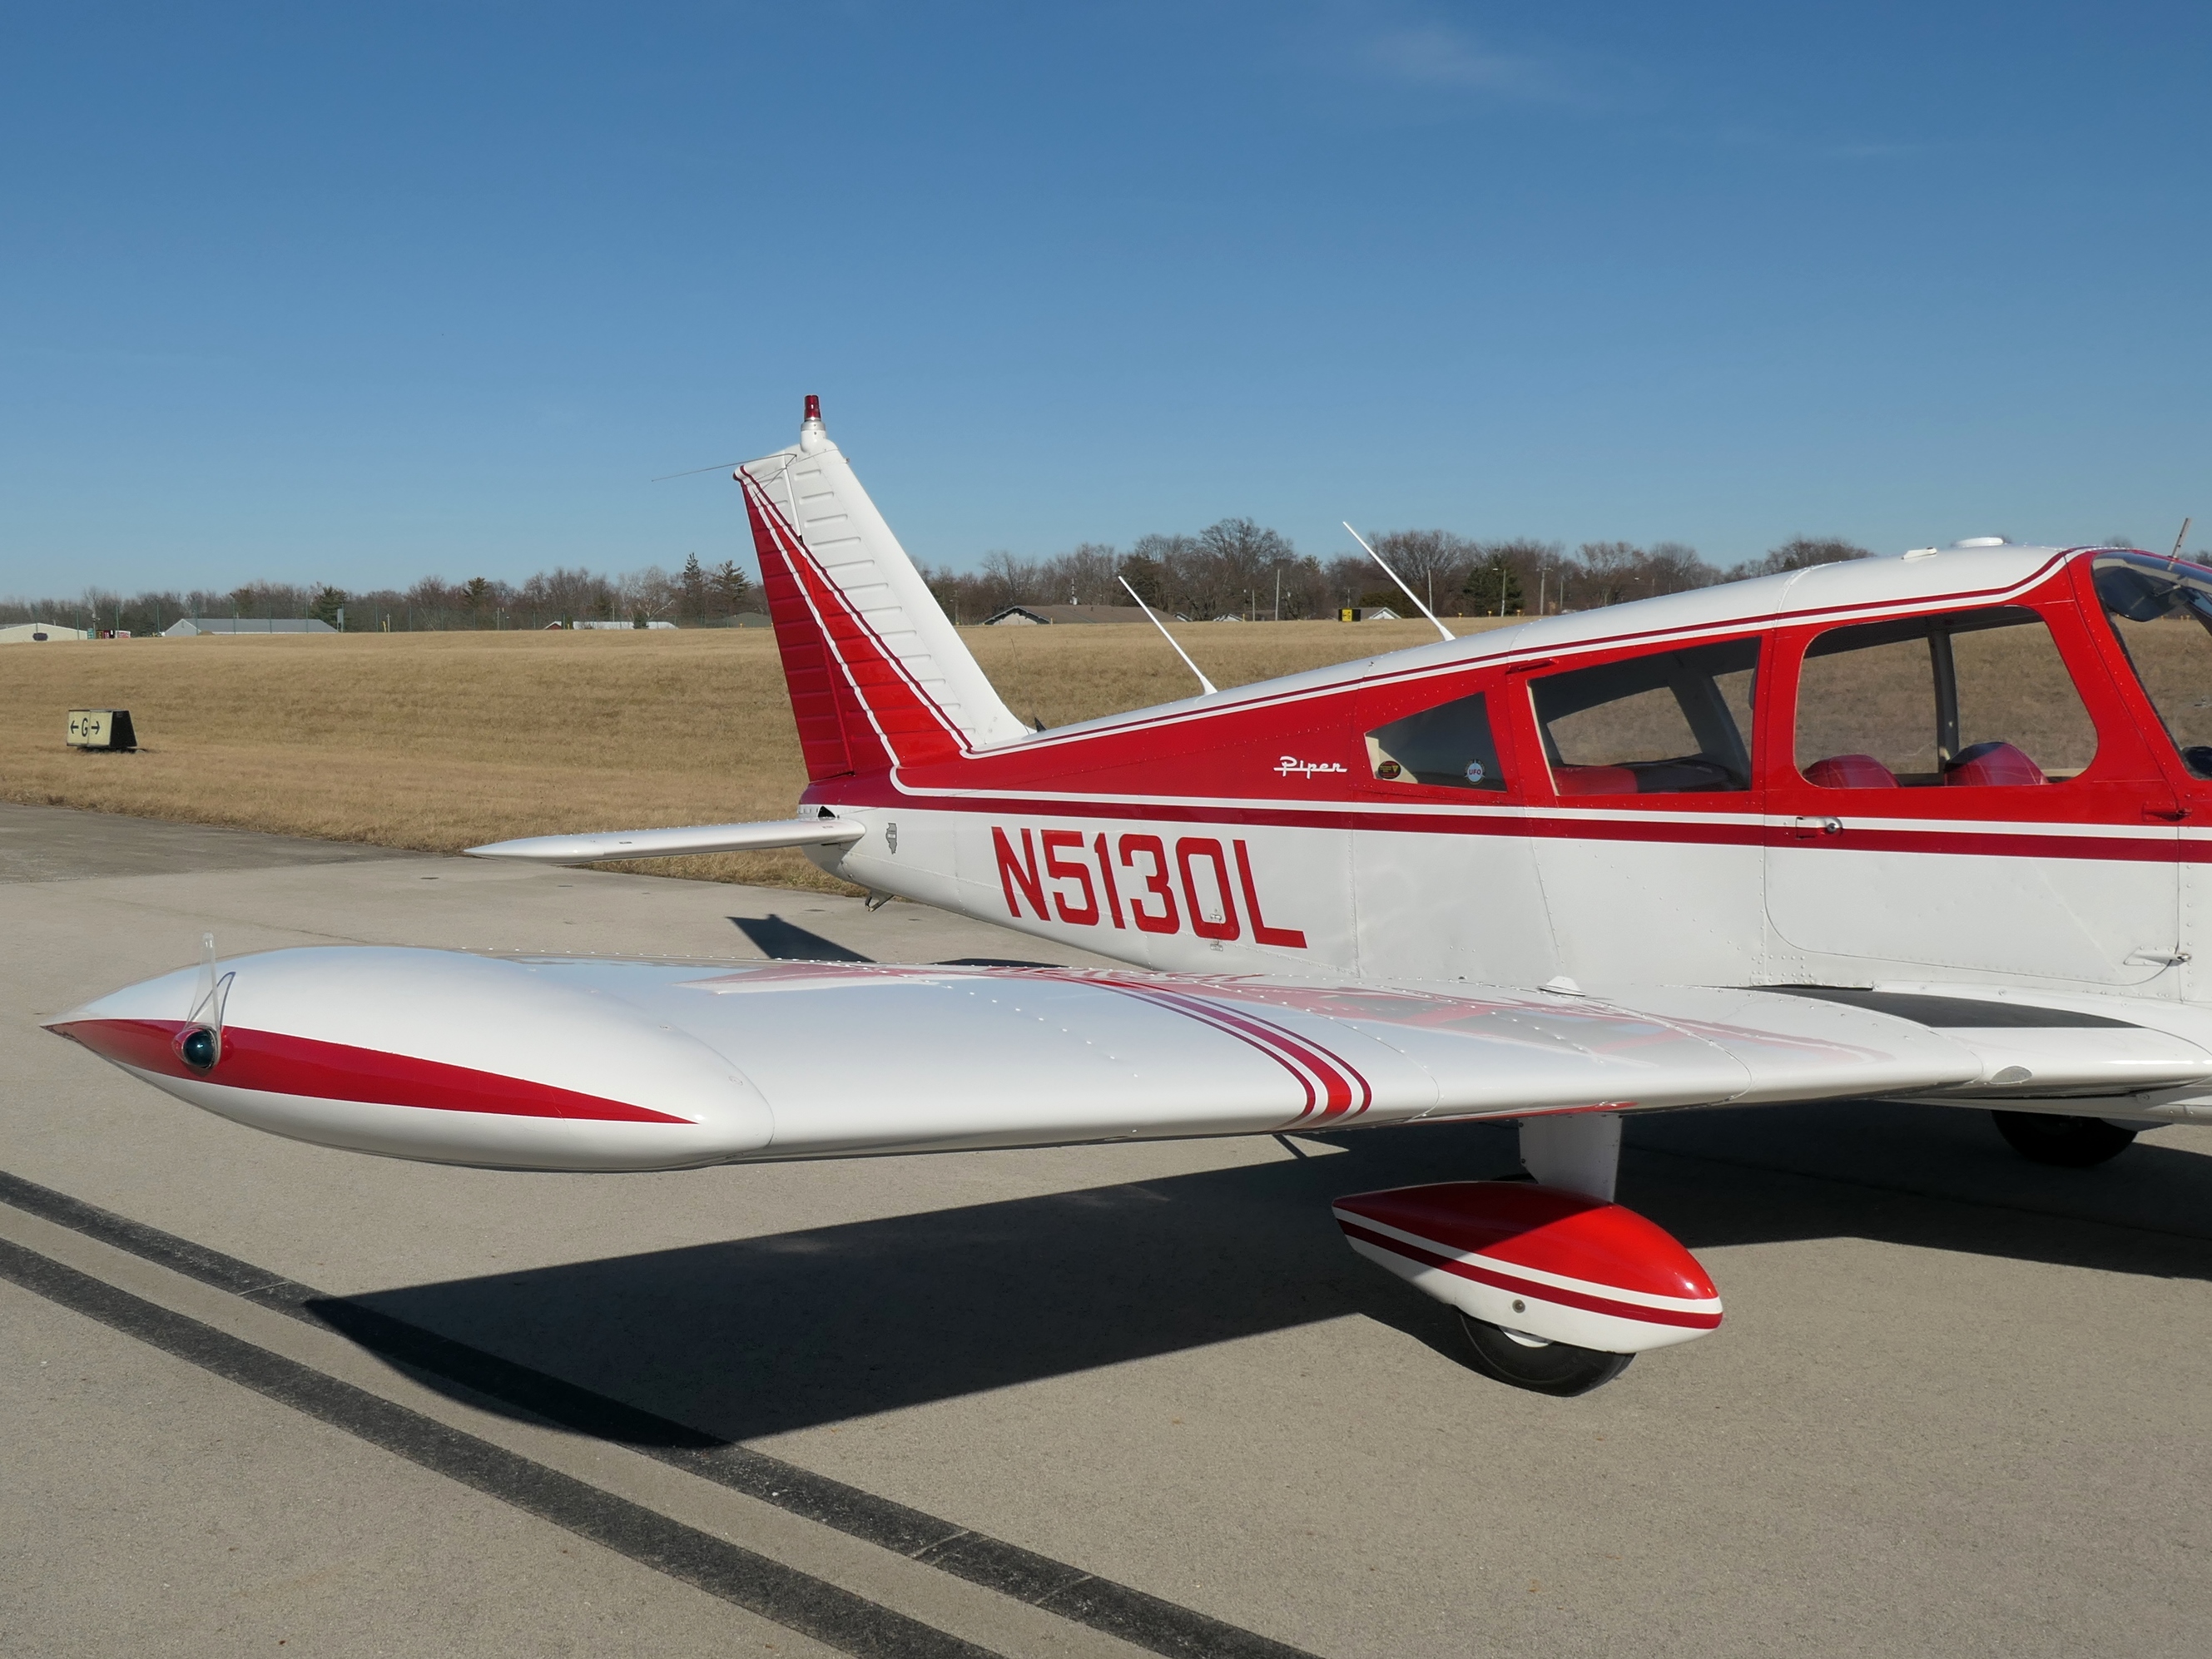 Piper Cherokee 180D - N5130L